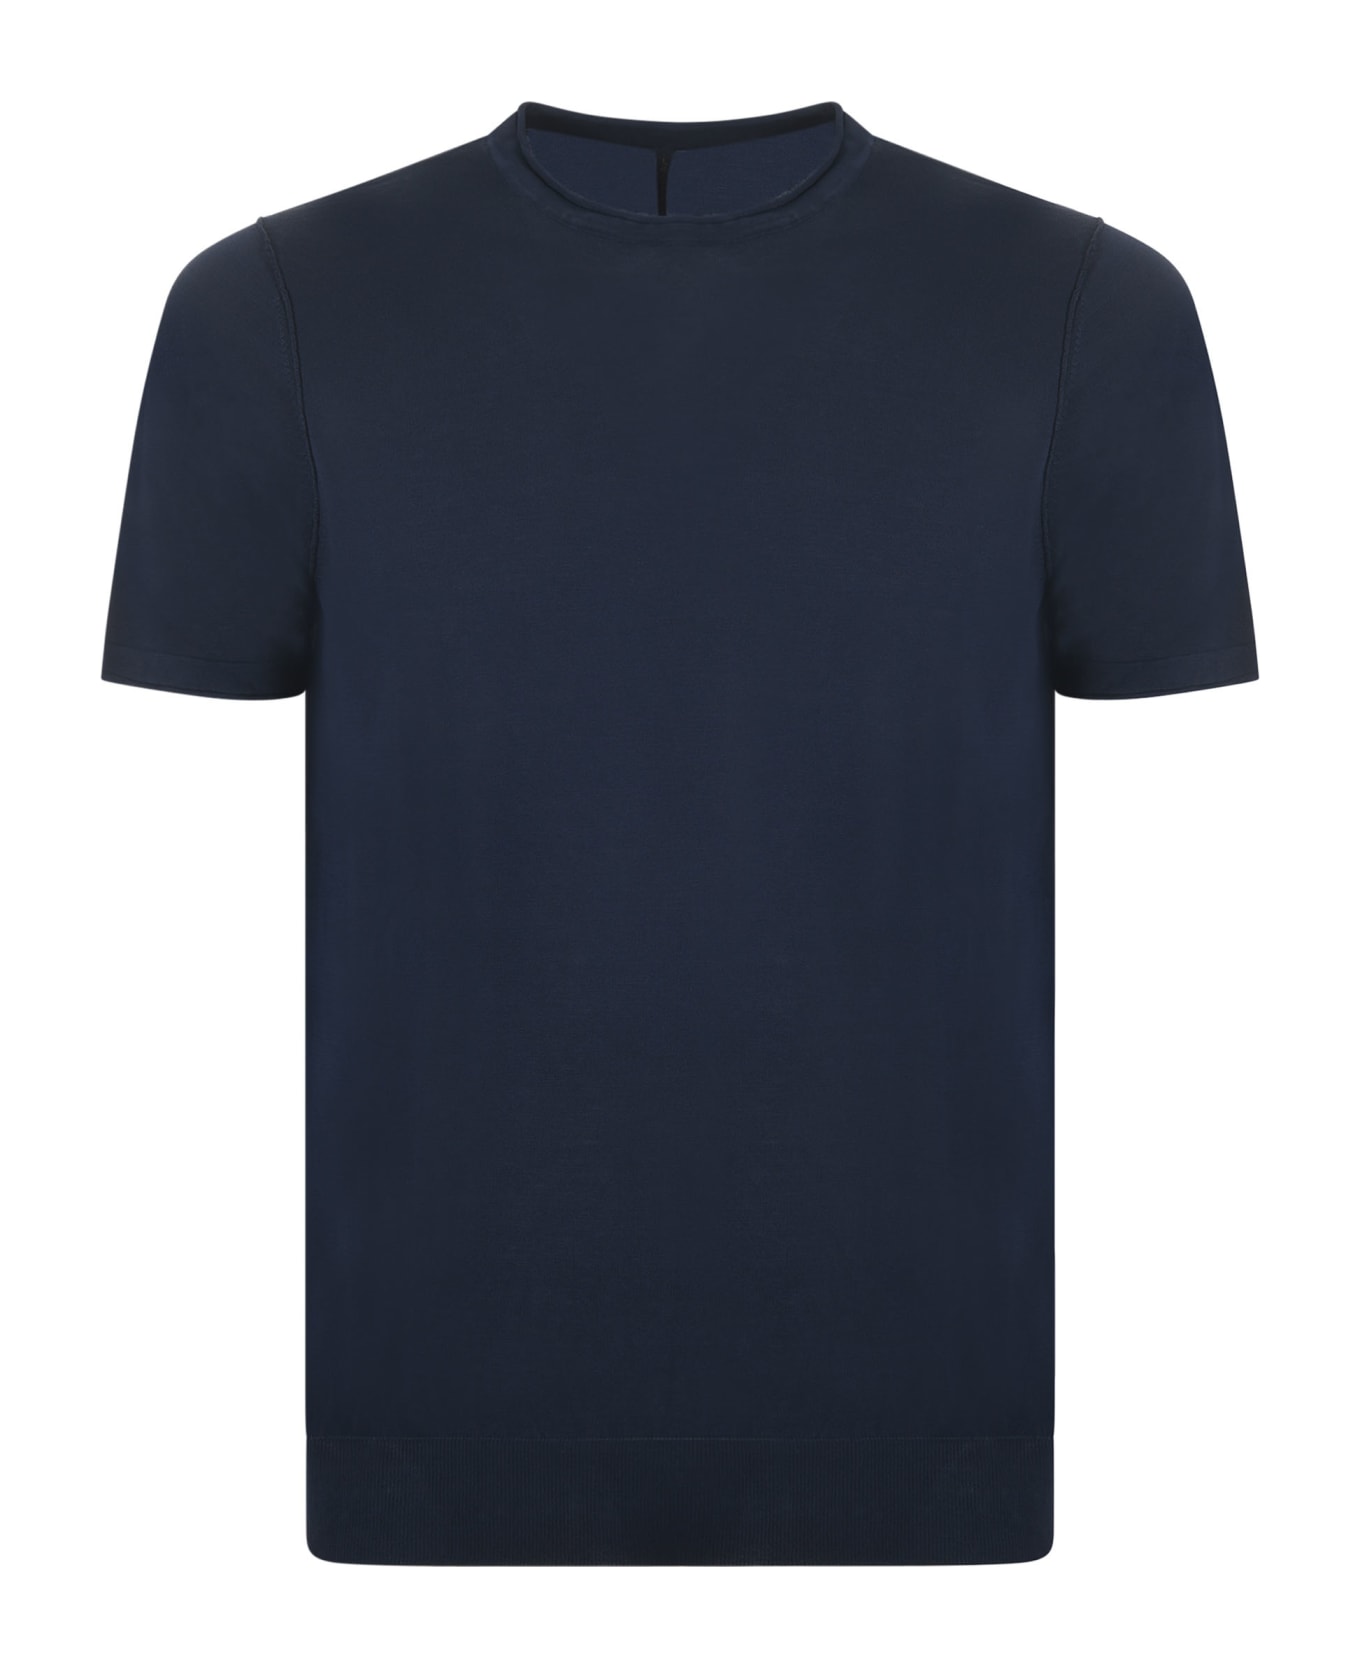 Jeordie's T-shirt - Blu scuro シャツ